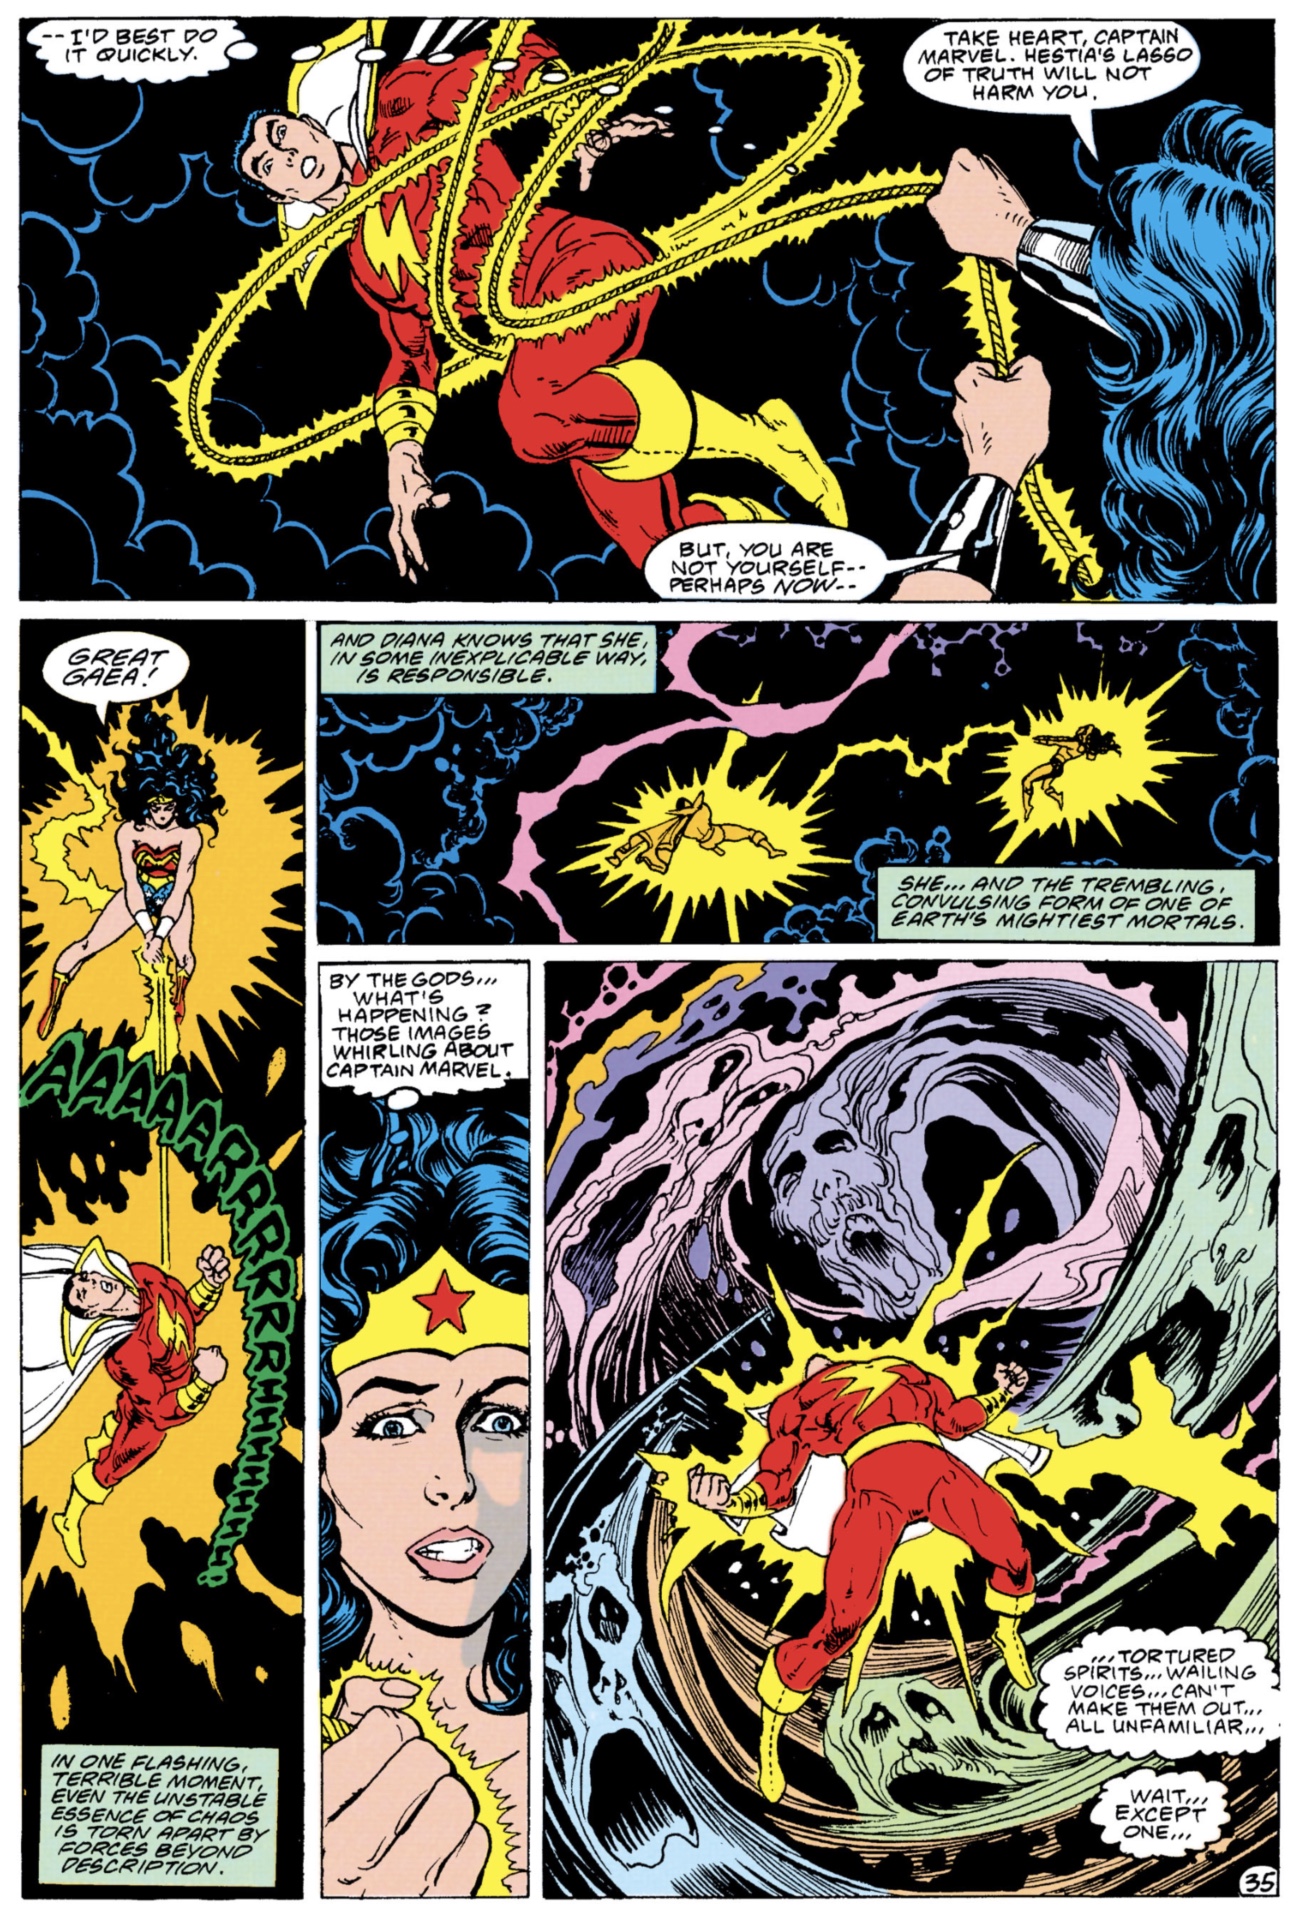 How Shazam! Fury of the Gods lassoed that Wonder Woman cameo